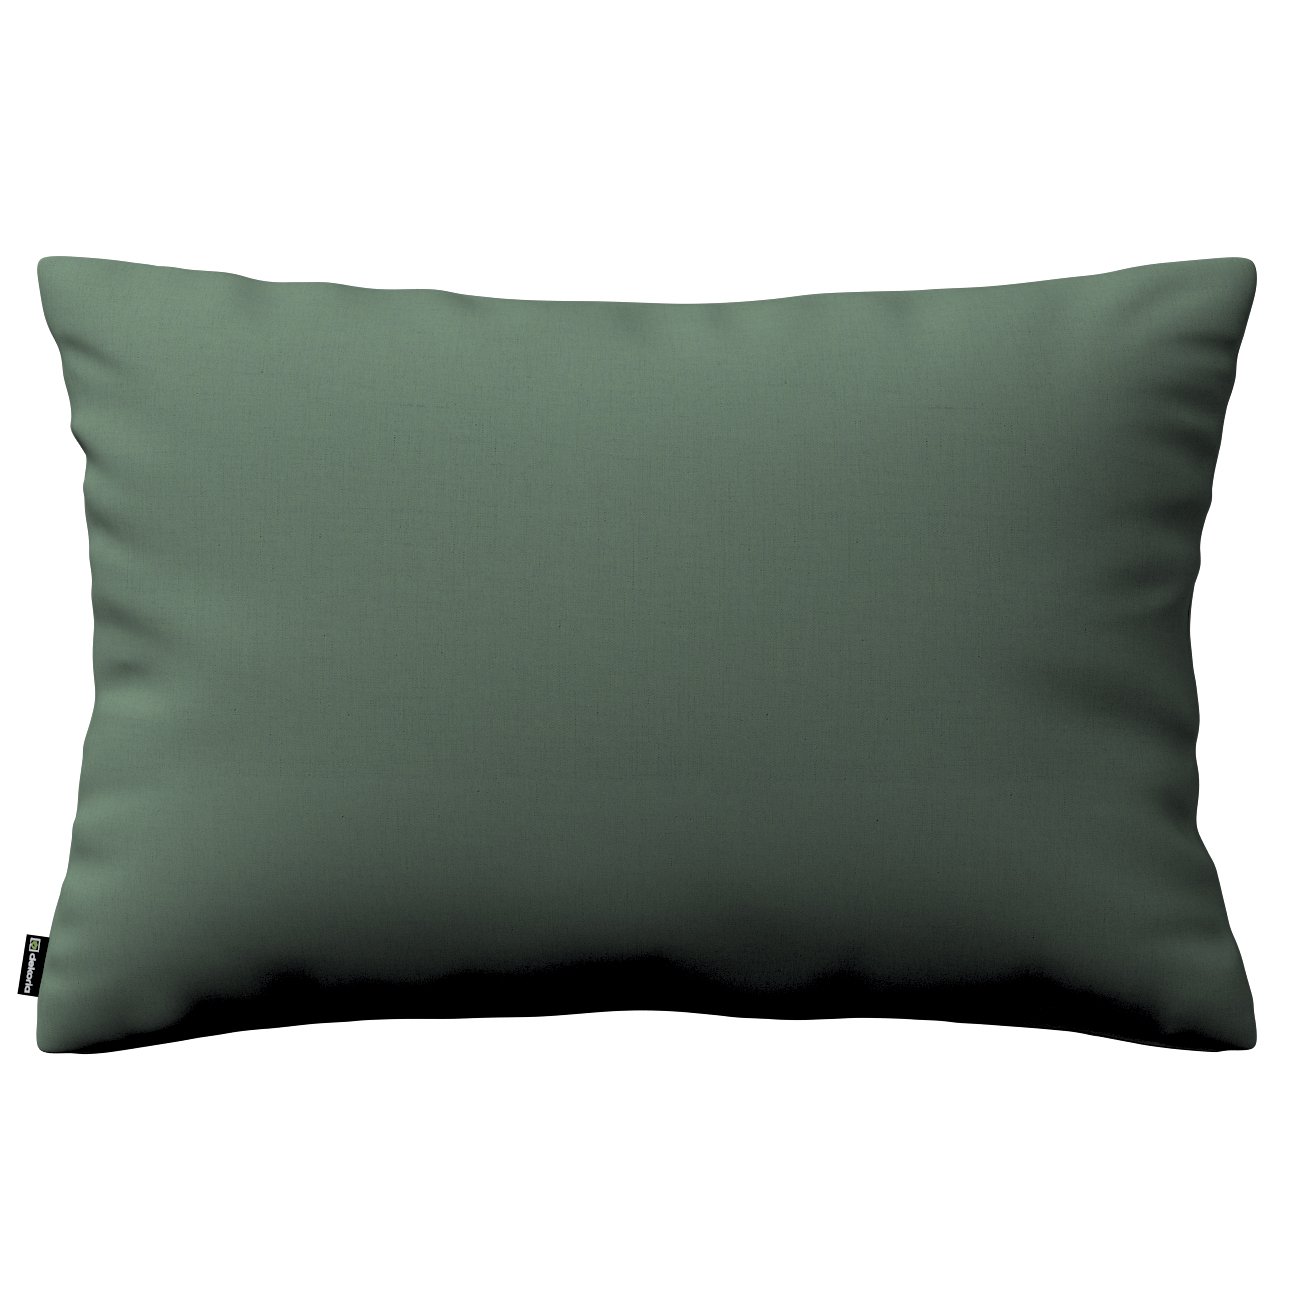 Dekoria Karin - jednoduchá obliečka, 60x40cm, matná zelená, 60 x 40 cm, Linen, 159-08